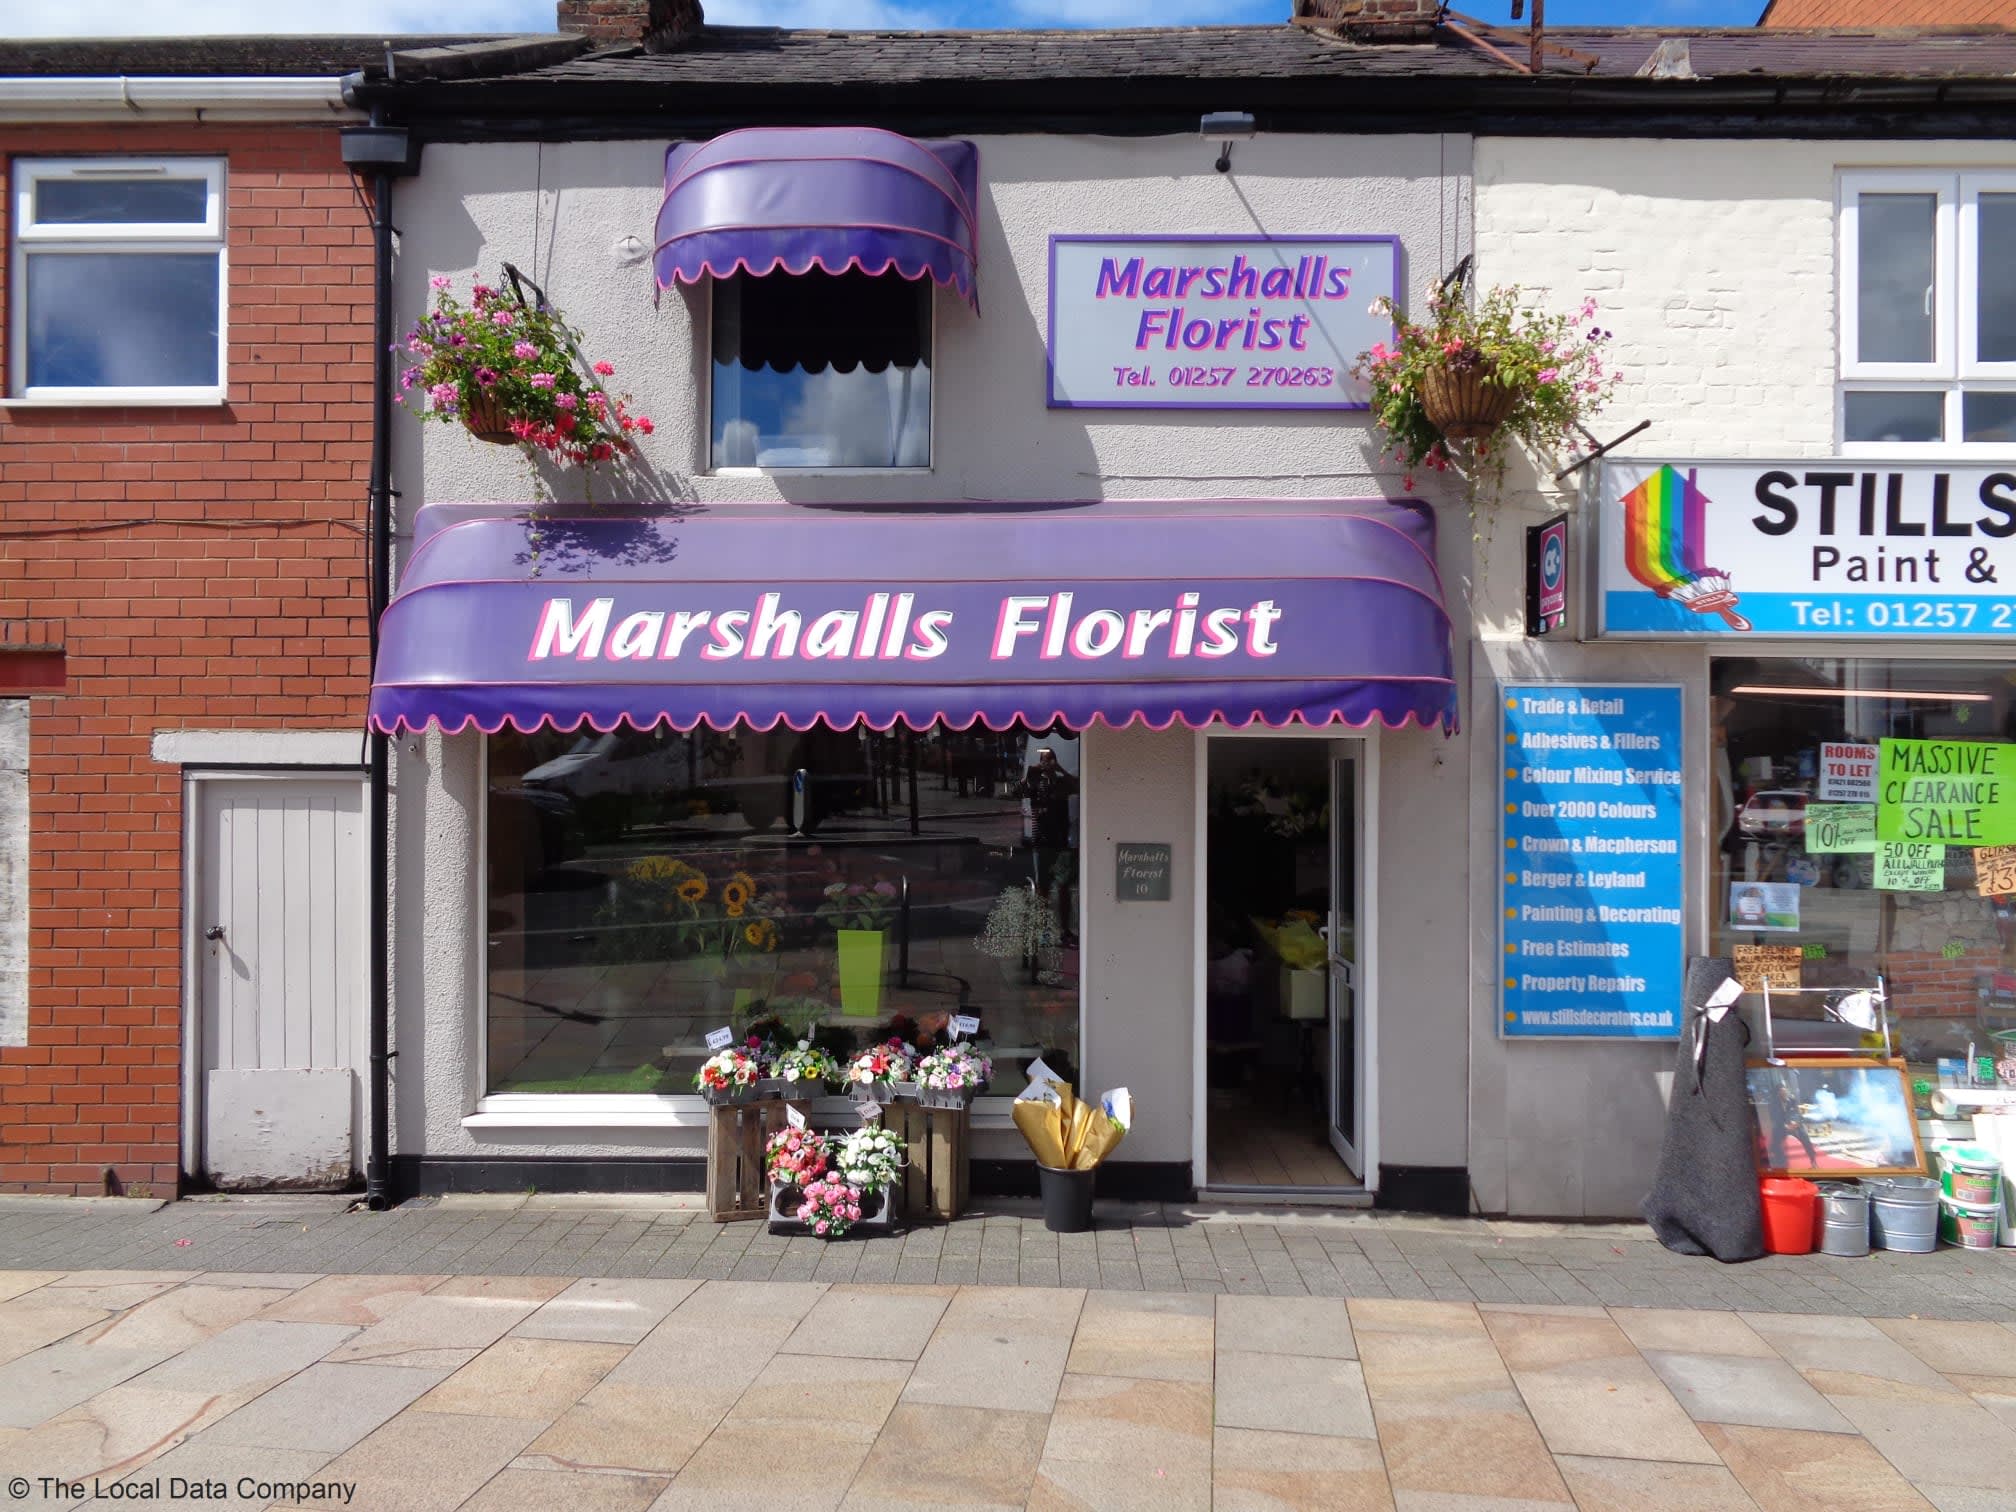 Marshall's Florist Chorley 01257 270263